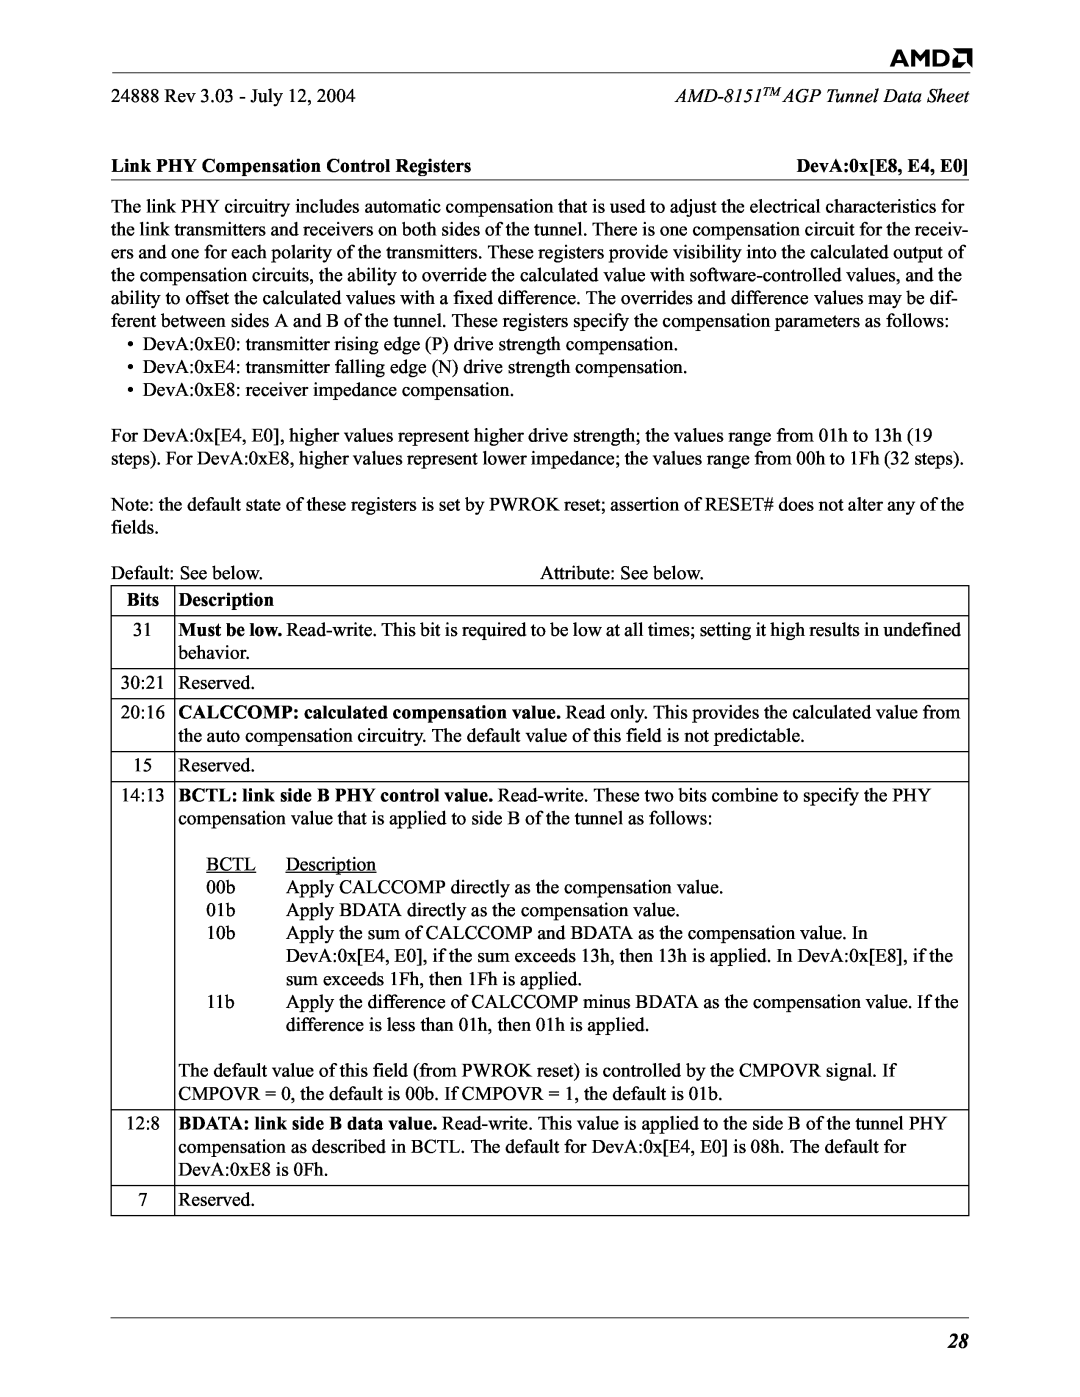 AMD 8151 specifications Rev 3.03 - July, Link PHY Compensation Control Registers, DevA 0xE8, E4, E0, Bits, Description 